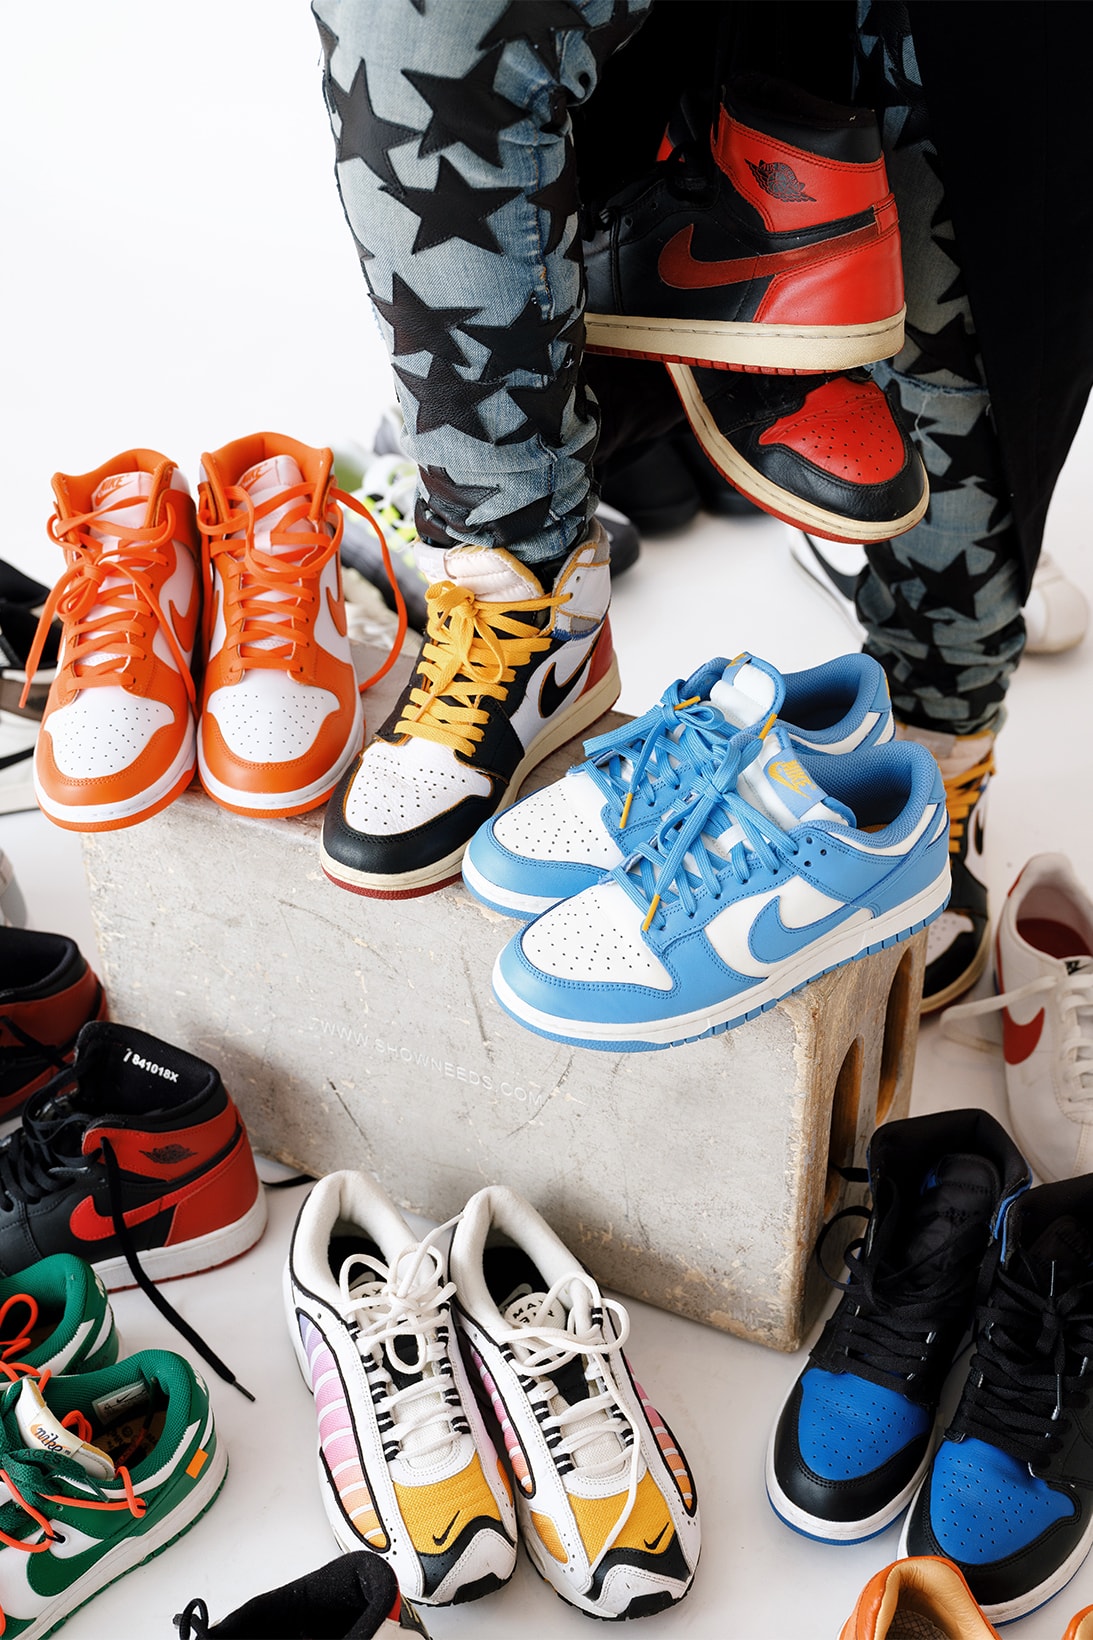 shaniqua j sneaker collector content creator wardrobe stylist influencer fashion kicks footwear nike air jordan 1 